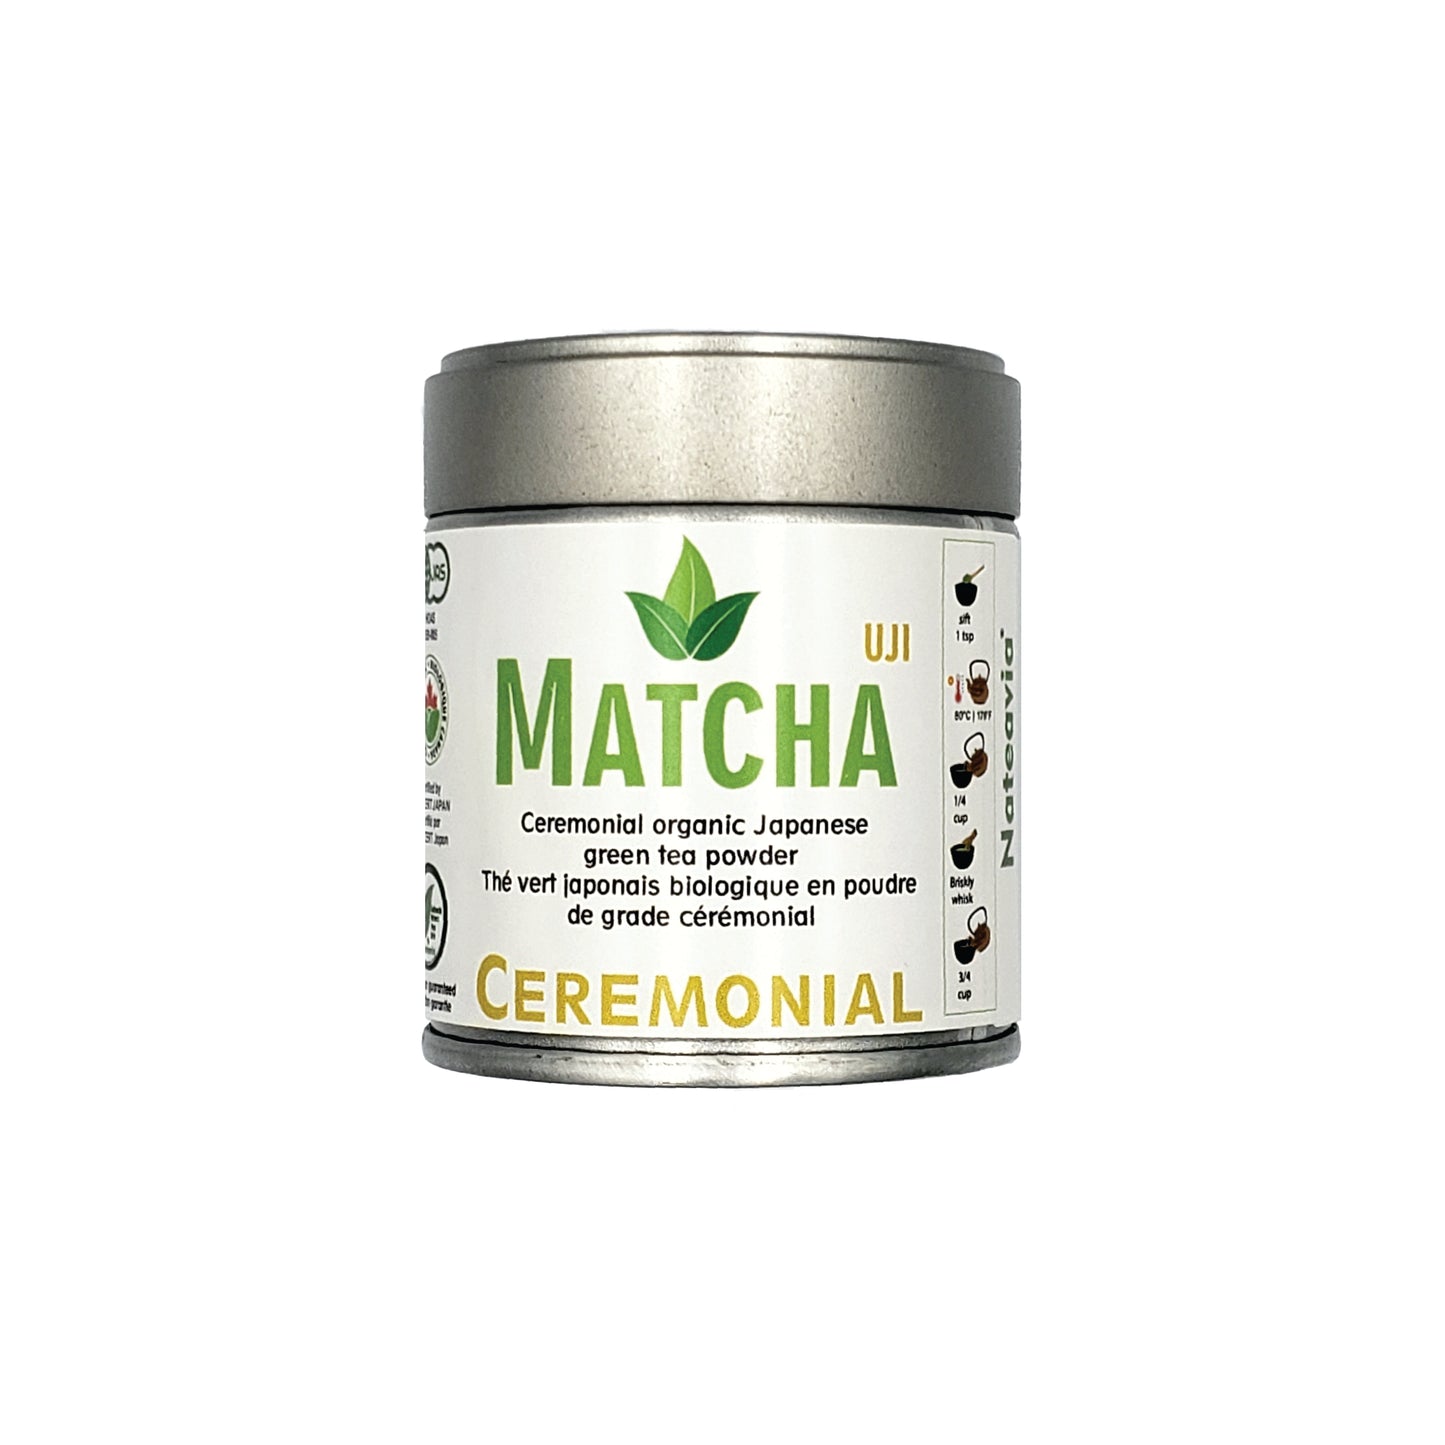 Nateavia Matcha - Ceremonial Grade Organic Japanese Green Tea Matcha Powder - Organic Unsweetened Easy Brewing - Authentic Japanese, Uji-Kyoto - 40g